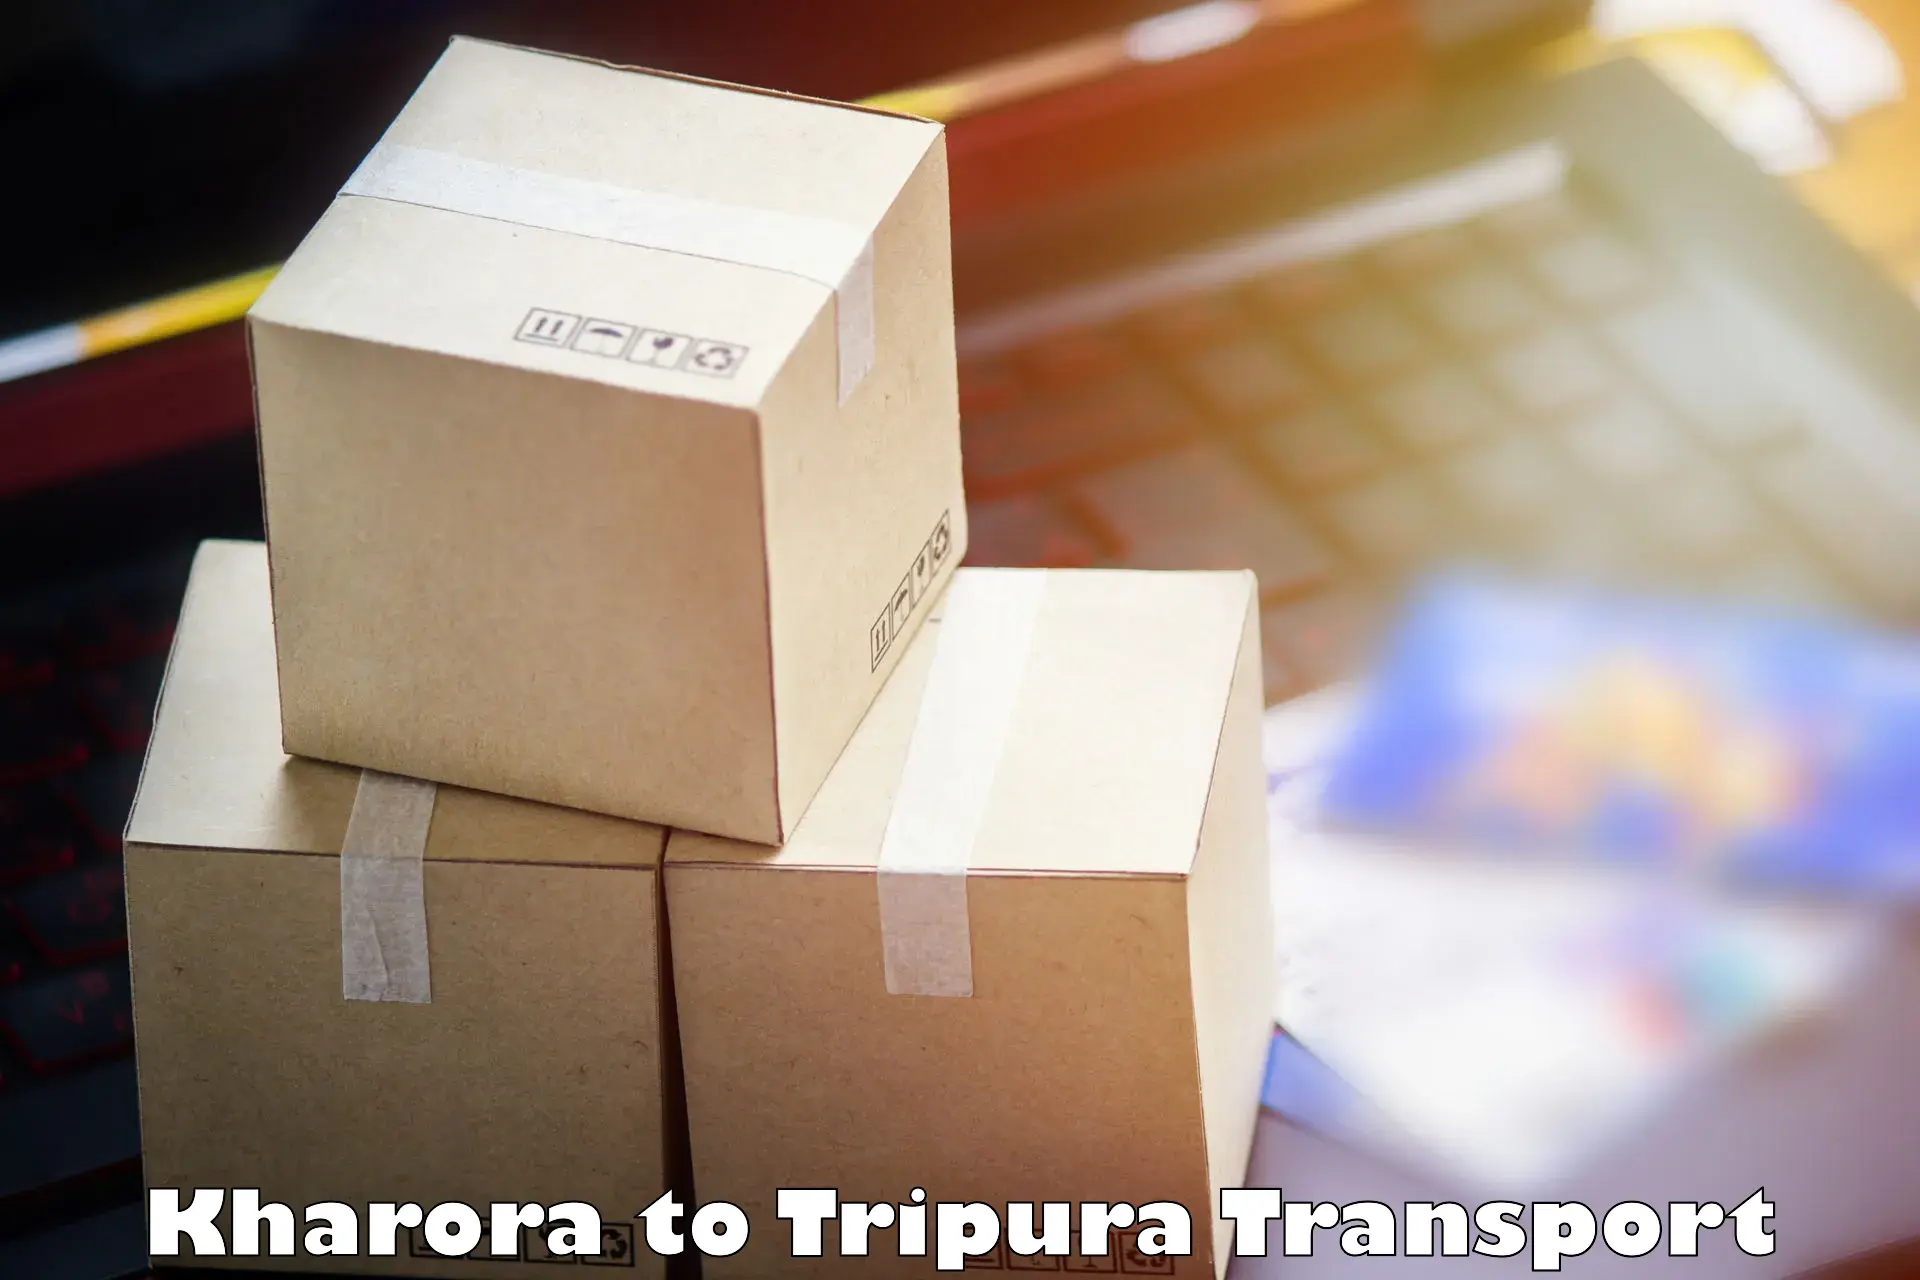 Truck transport companies in India Kharora to Udaipur Tripura